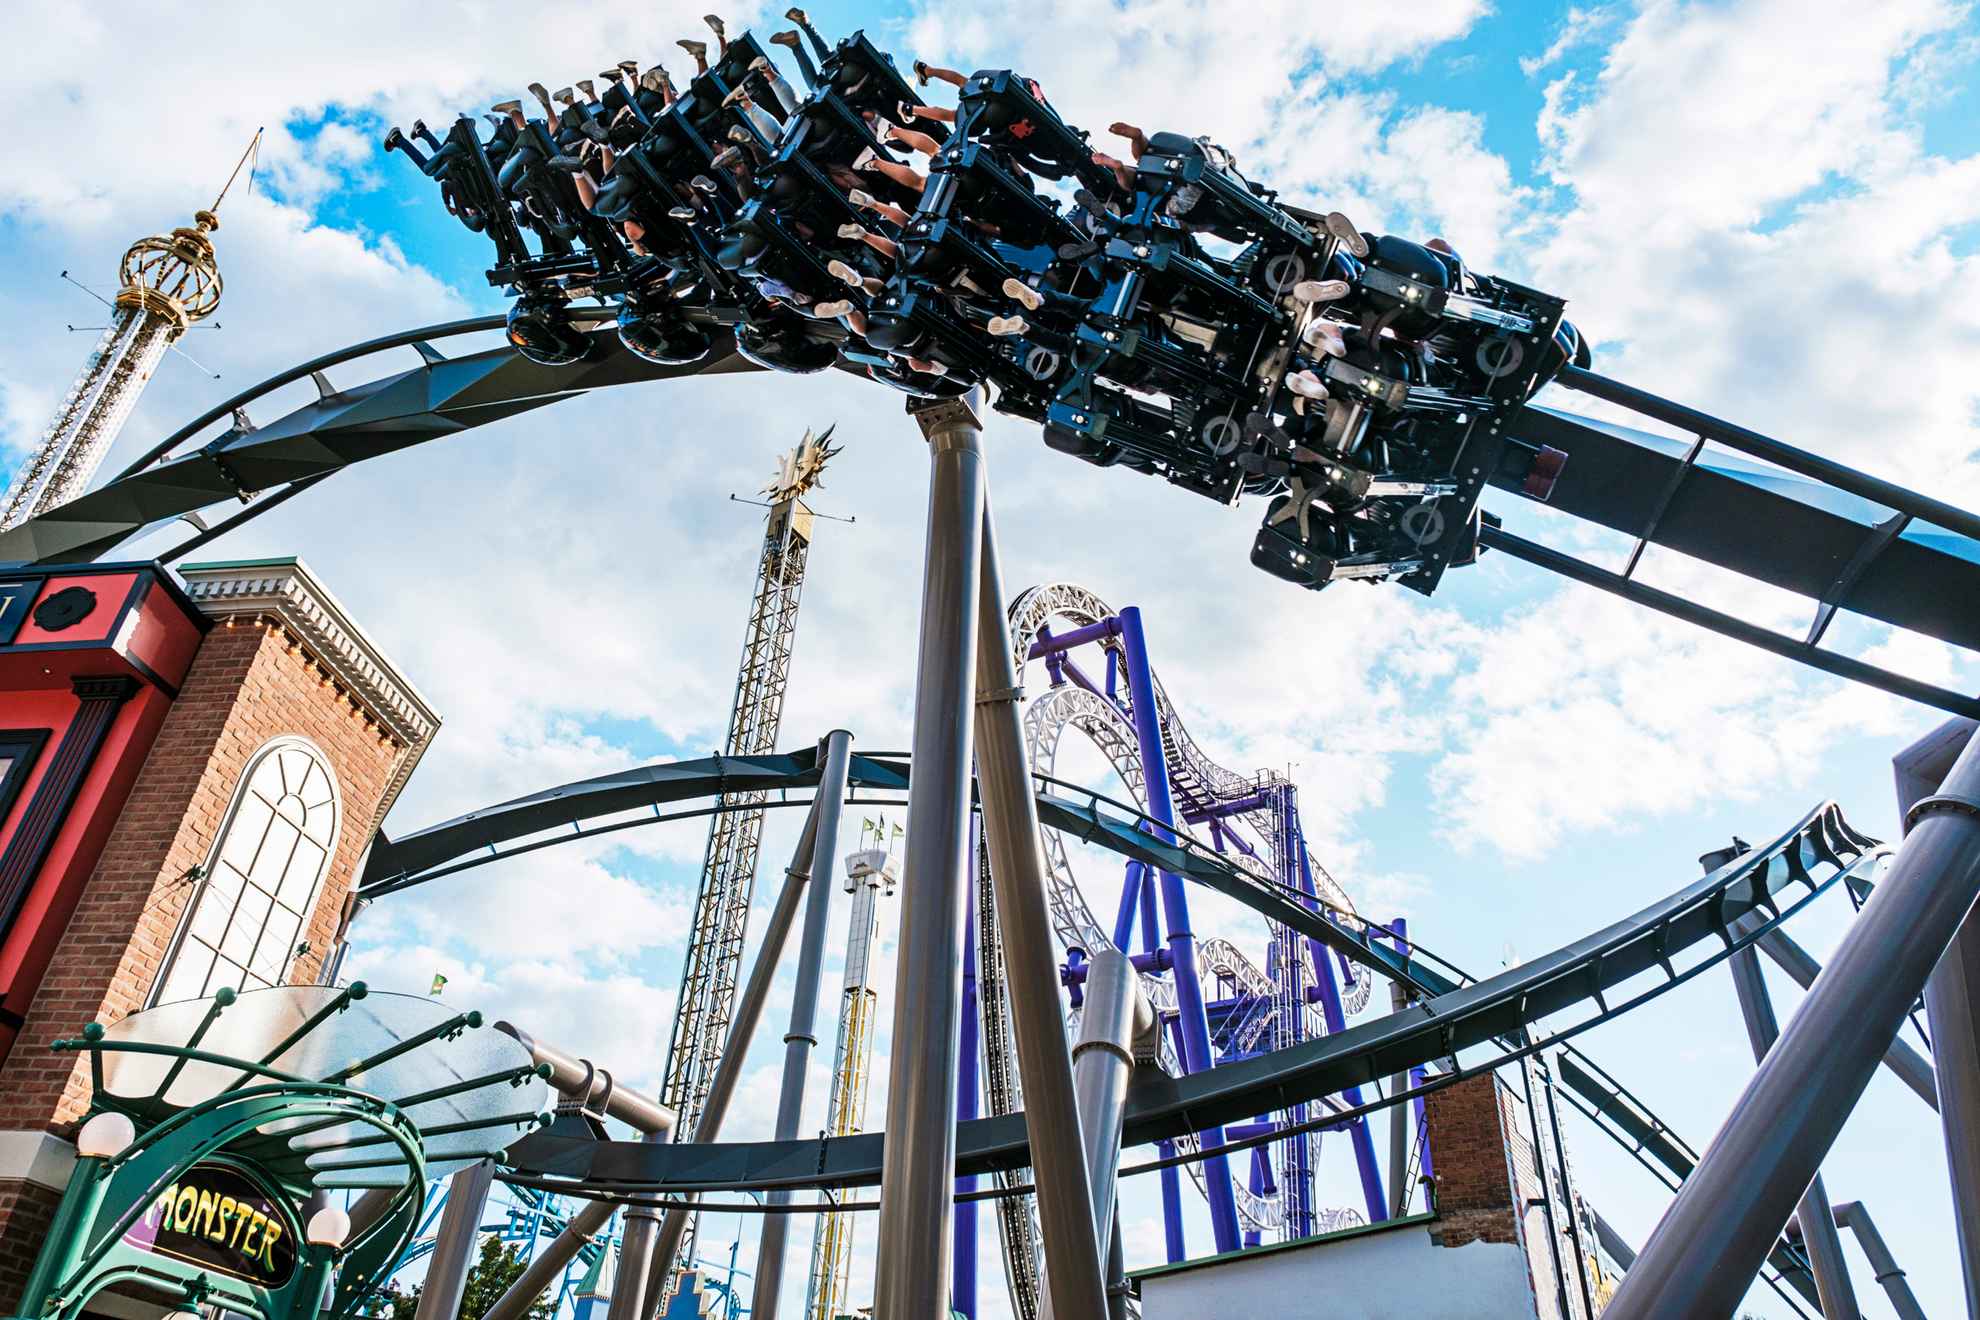 The roller coaster Monster at the amusement park Gröna Lund in Stockholm